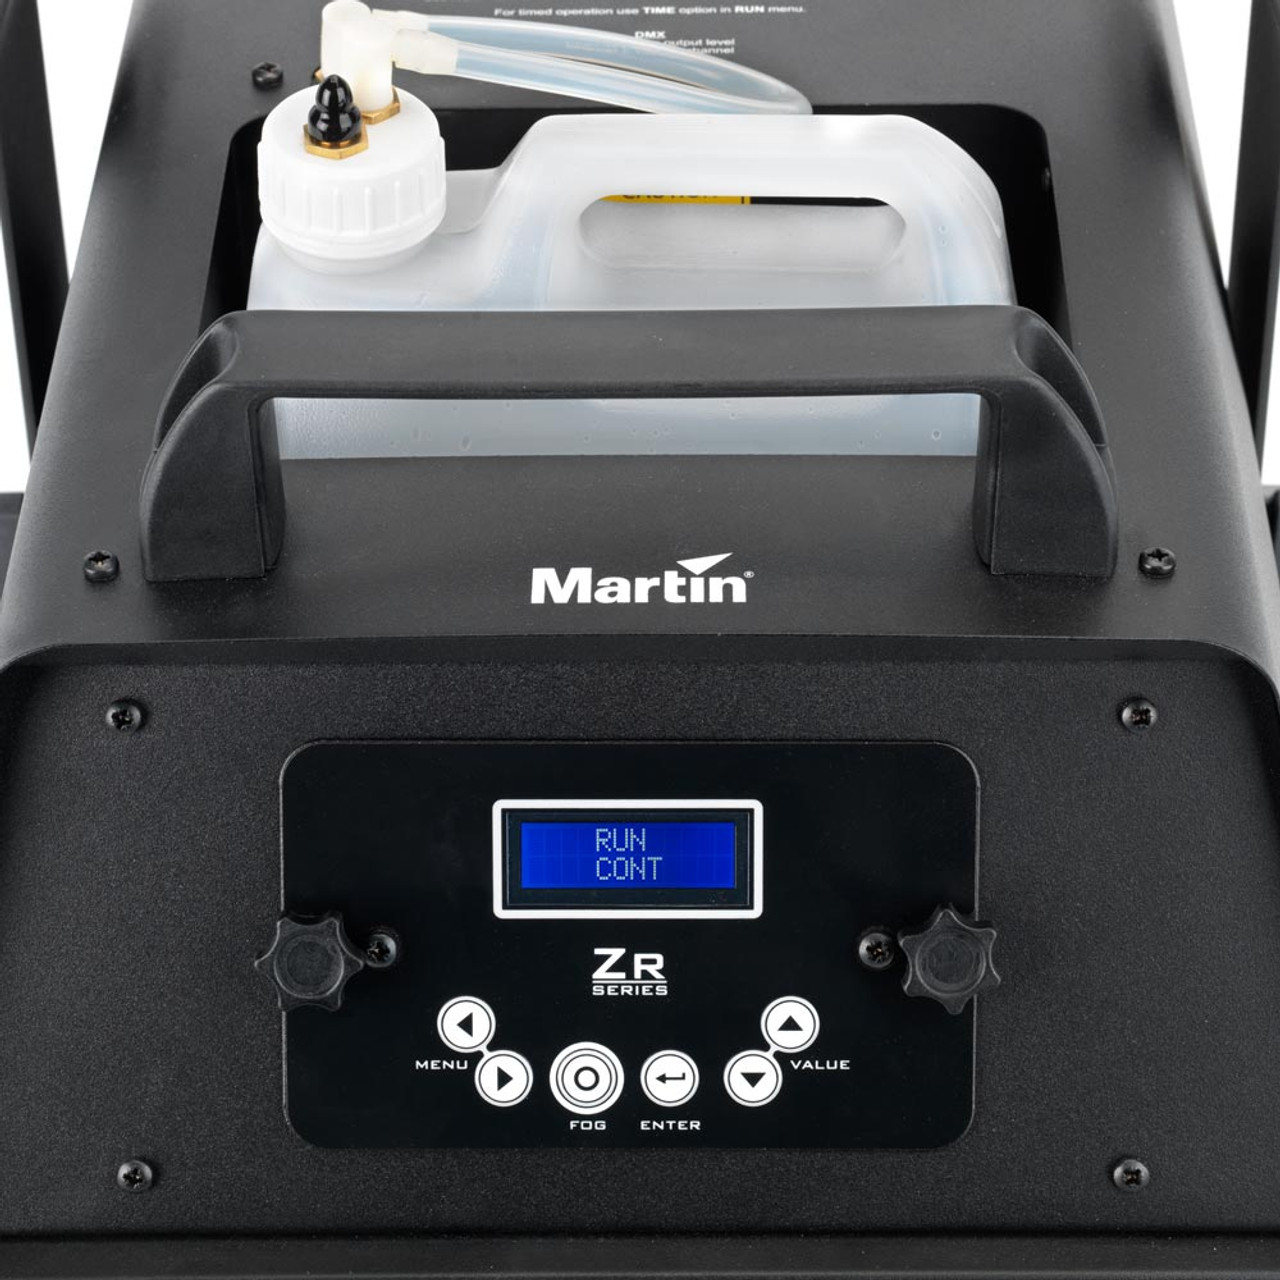 Martin Lighting JEM ZR45 2000 Watt Full-Sized Professional Fog Machine (92215370)